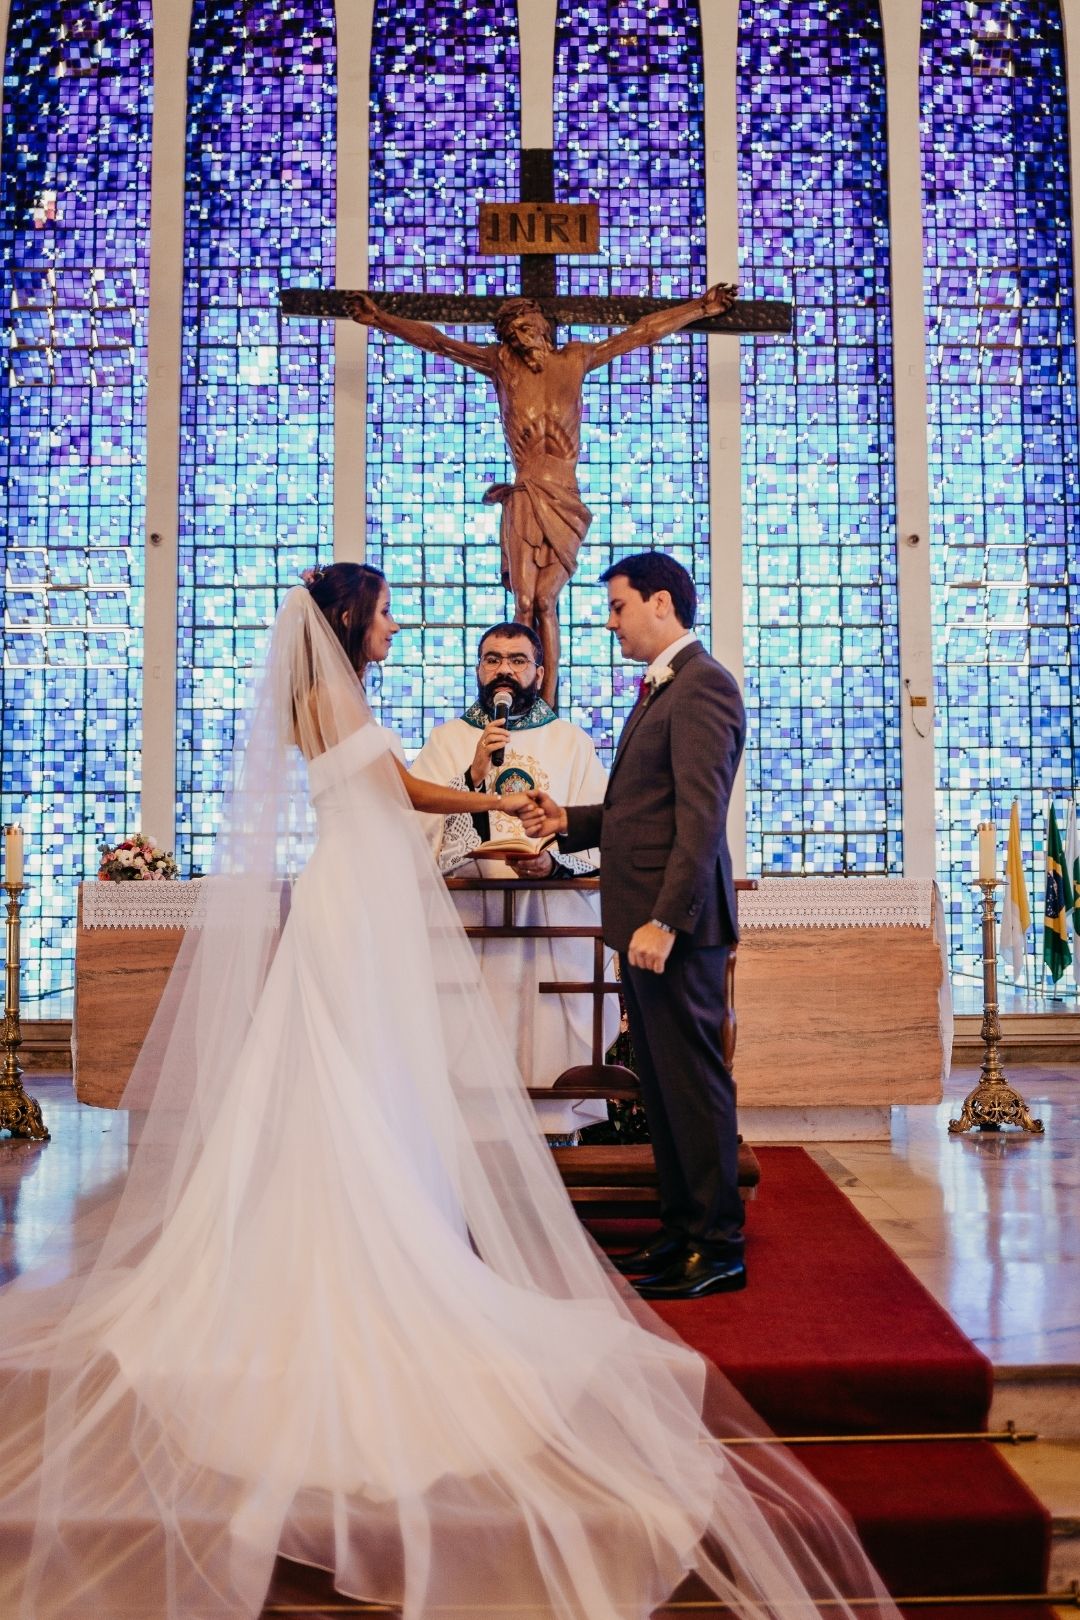 Casamento na igreja romântico cheios de DIY em Brasília